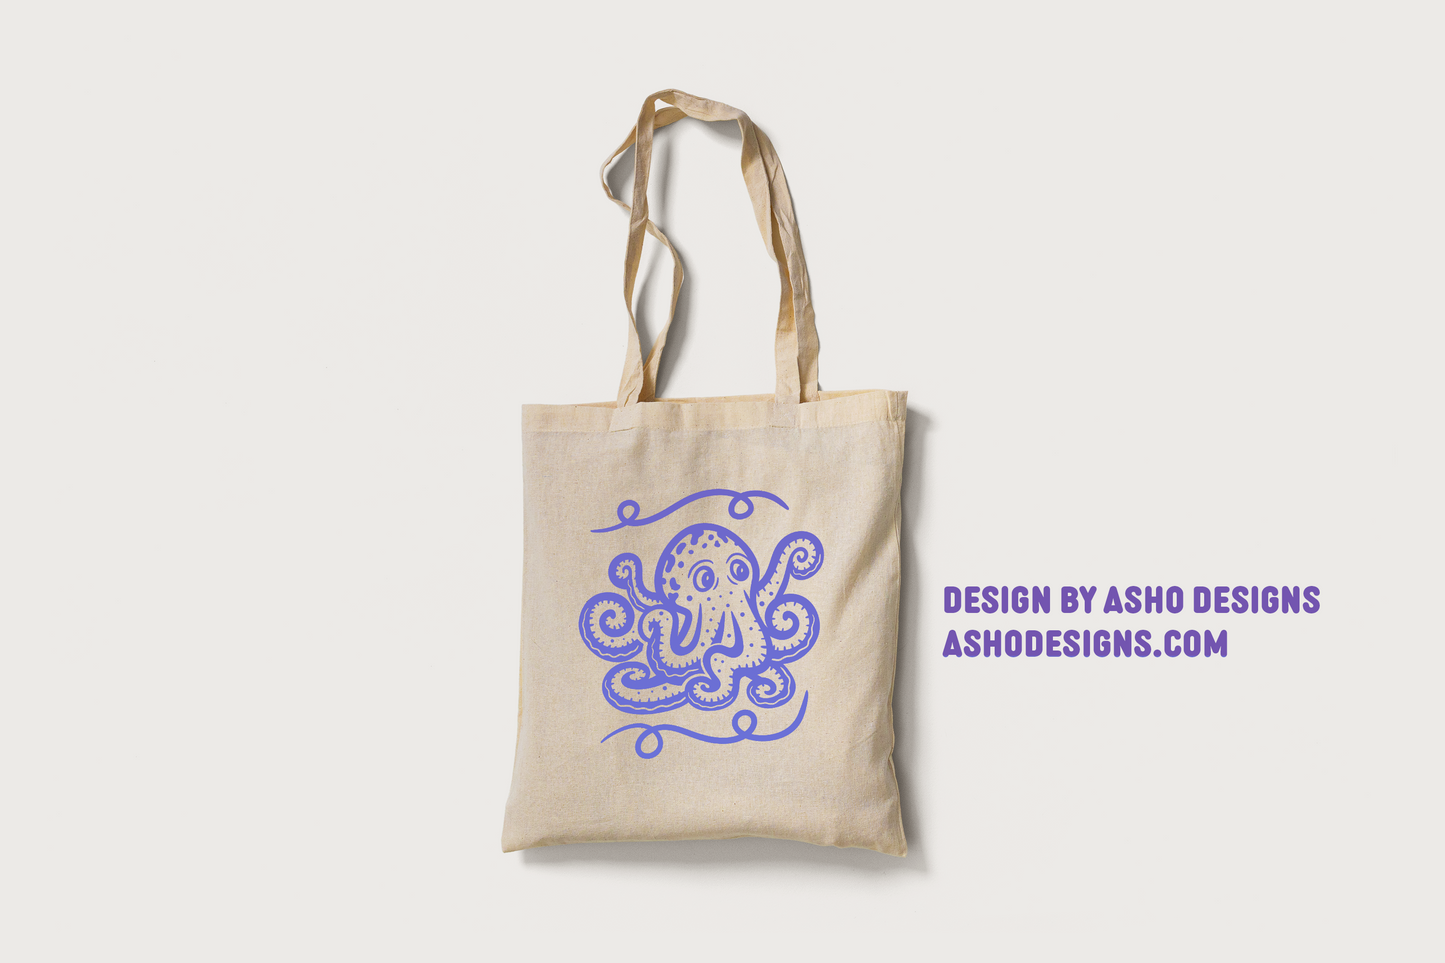 Cartoon Octopus Design SVG Digital Download for Commercial Use